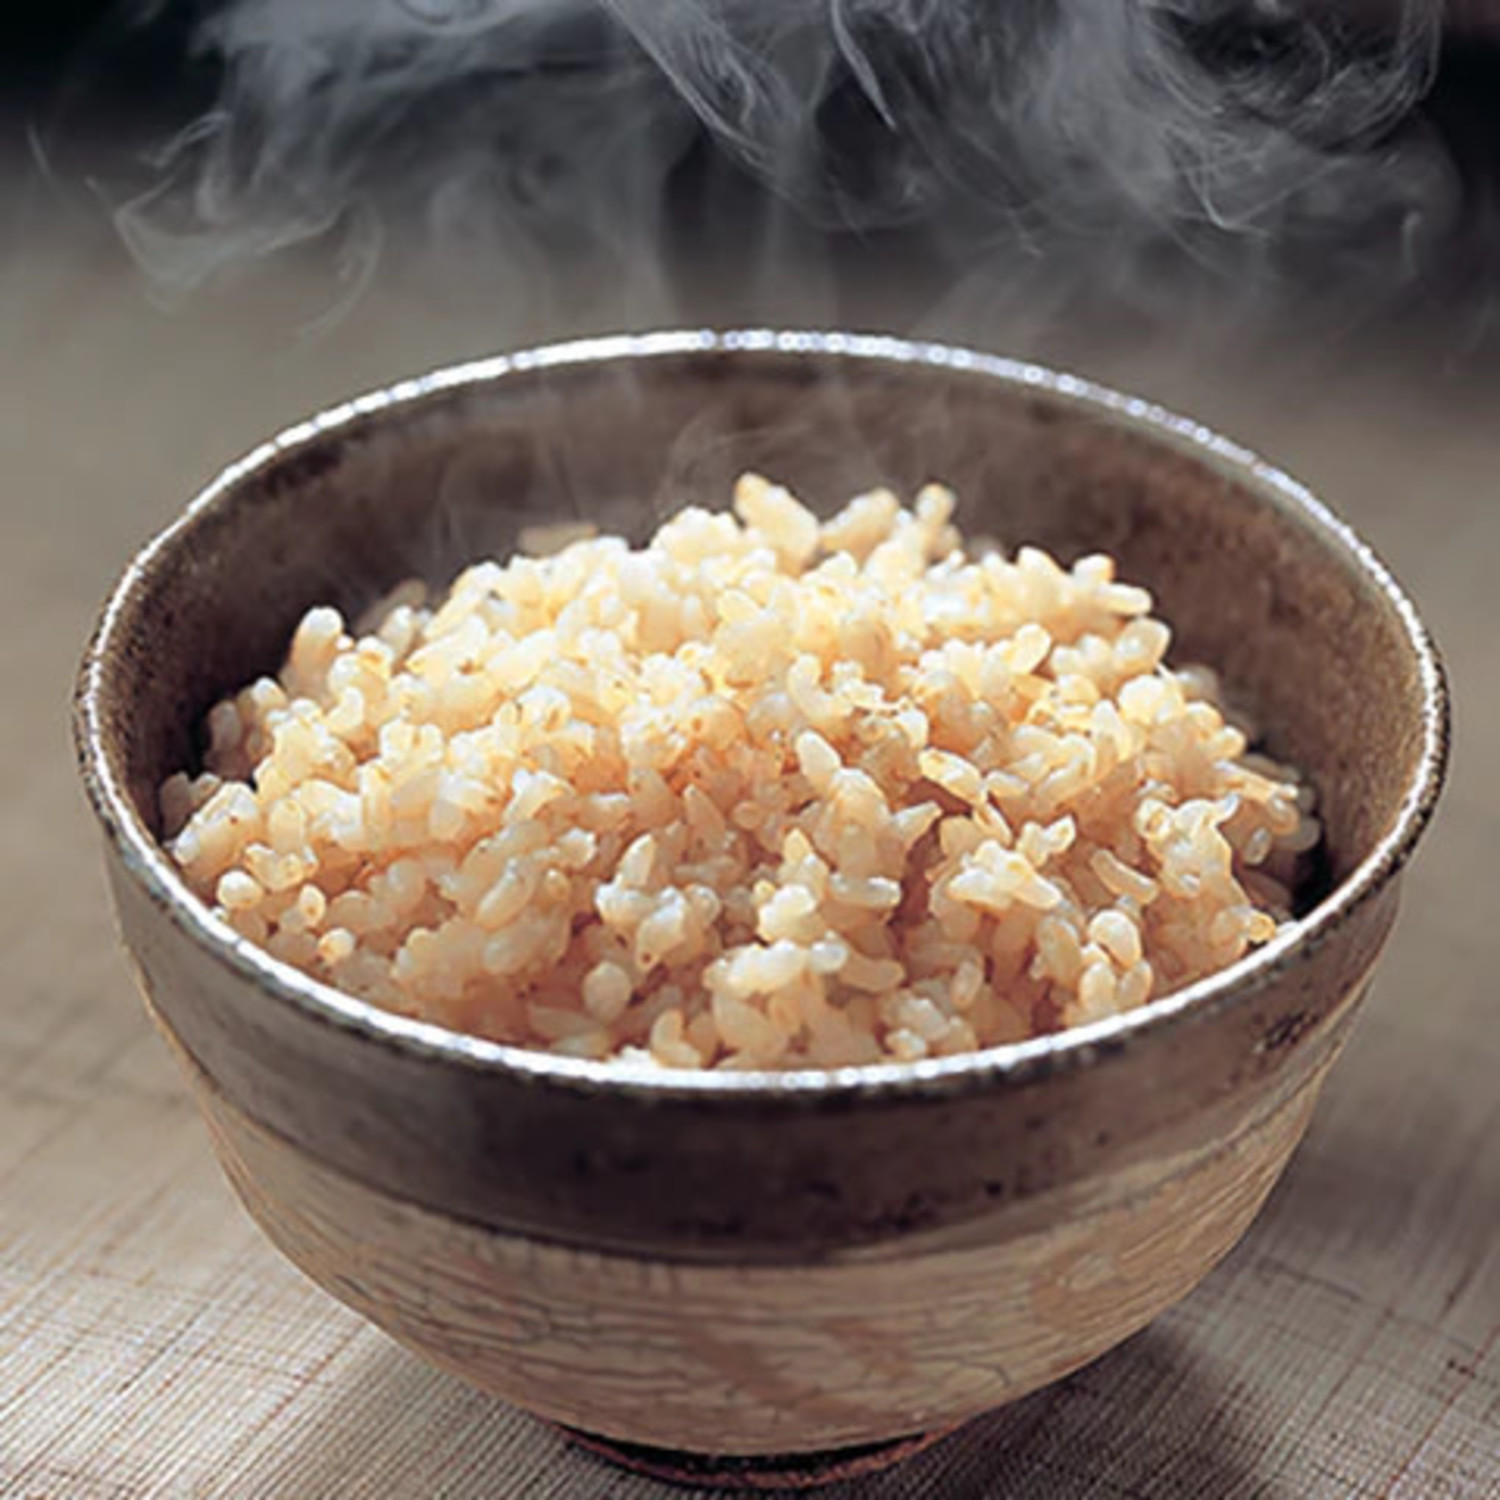 Zojirushi 3-Cup Rice Cooker